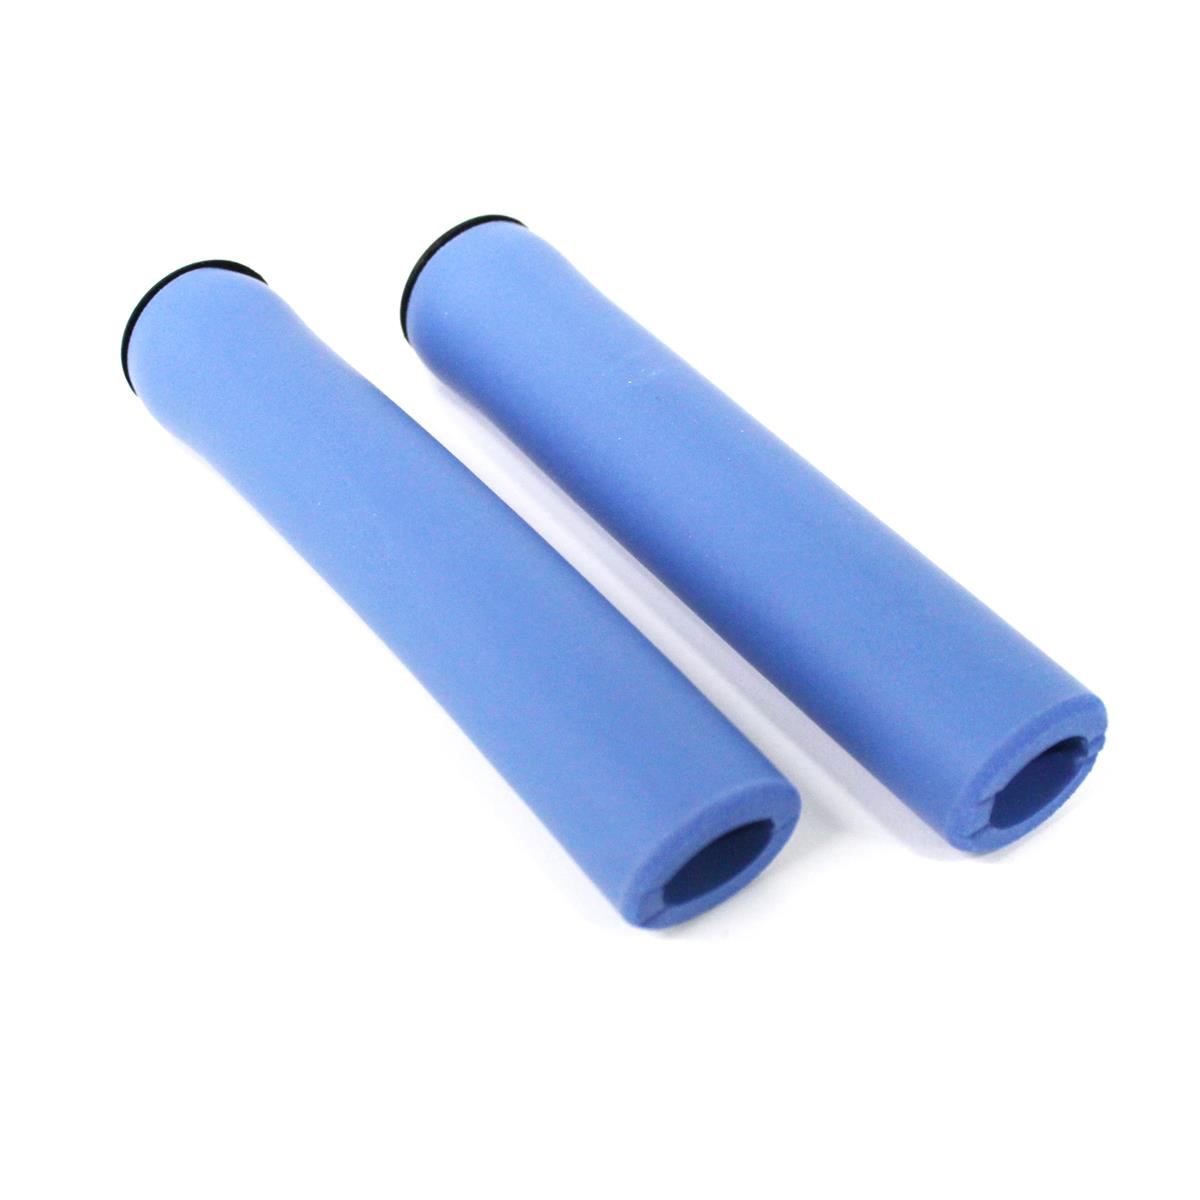 Coppia manopole Super Grip HL-001 silicone blu 130mm